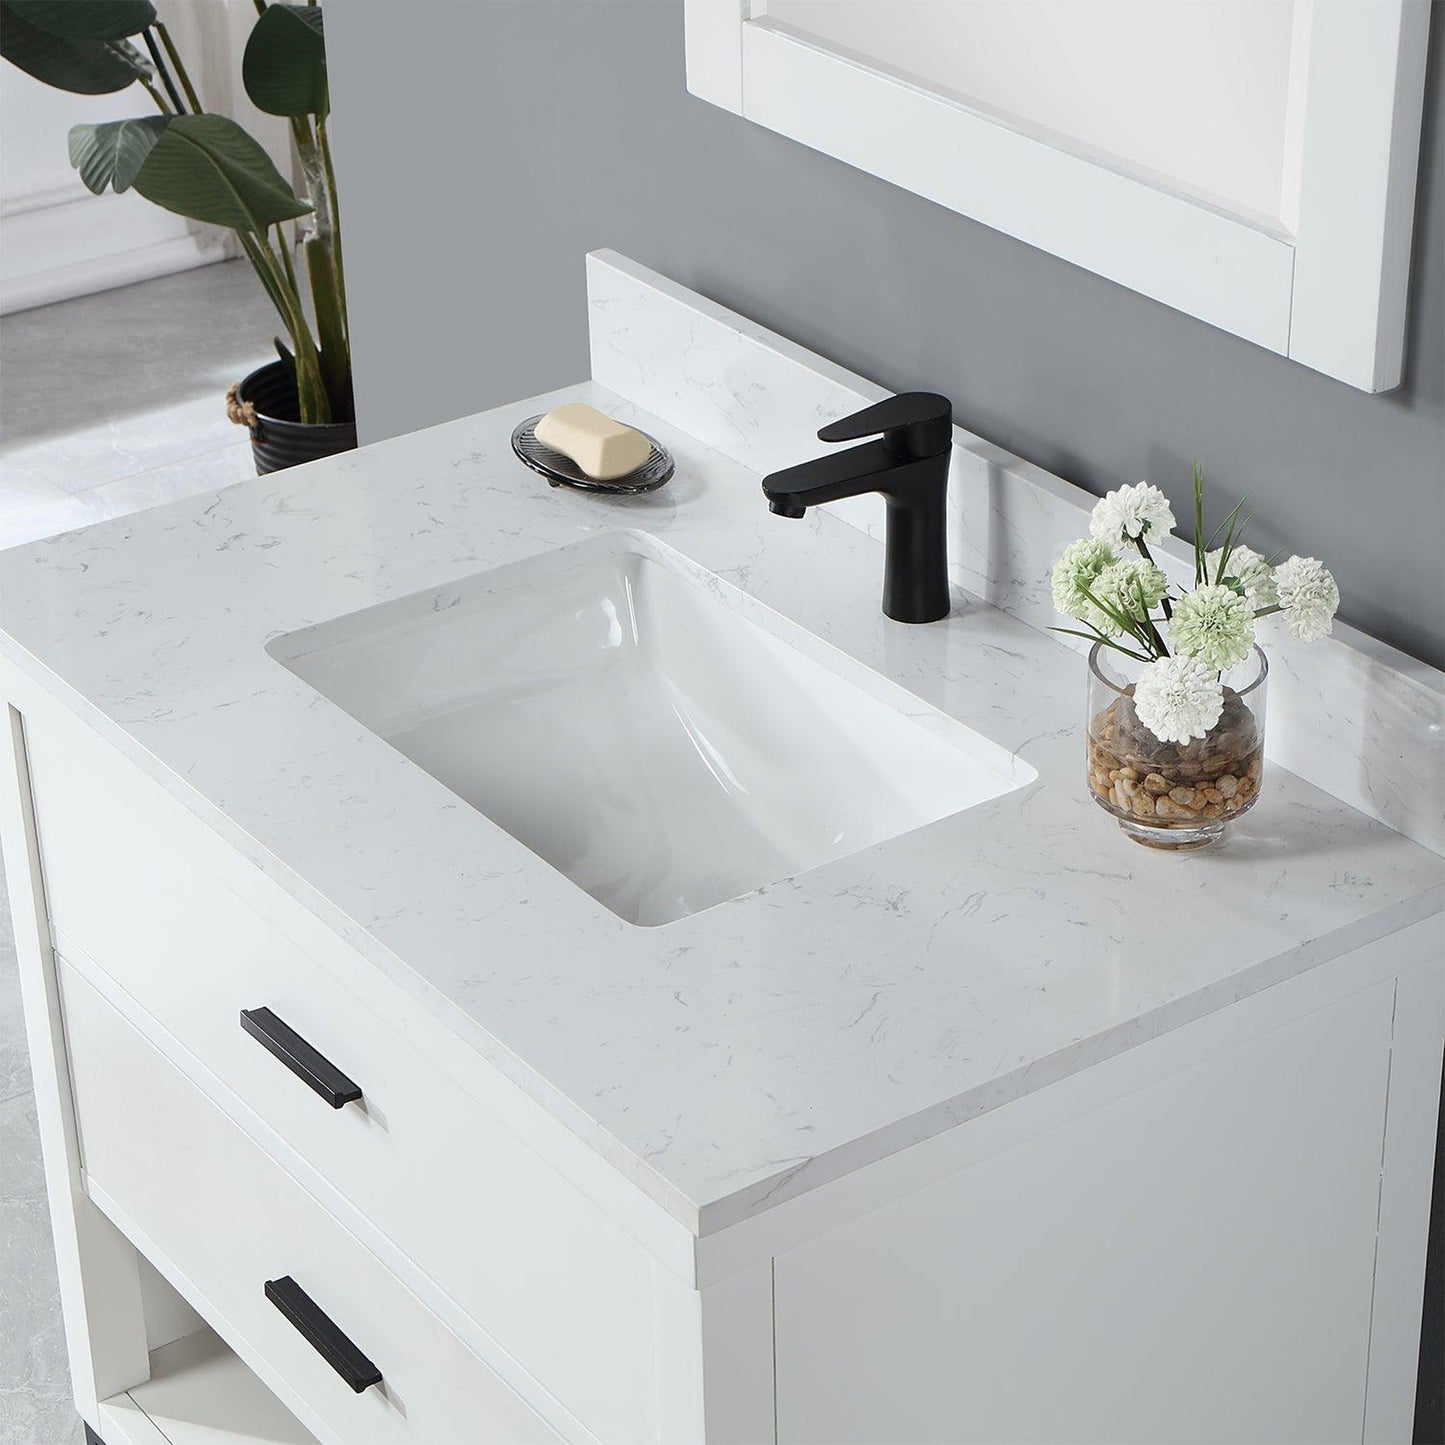 Altair Kesia 36" White Freestanding Single Bathroom Vanity Set With Mirror, Stylish Aosta White Composite Stone Top, Rectangular Undermount Ceramic Sink, Overflow, and Backsplash